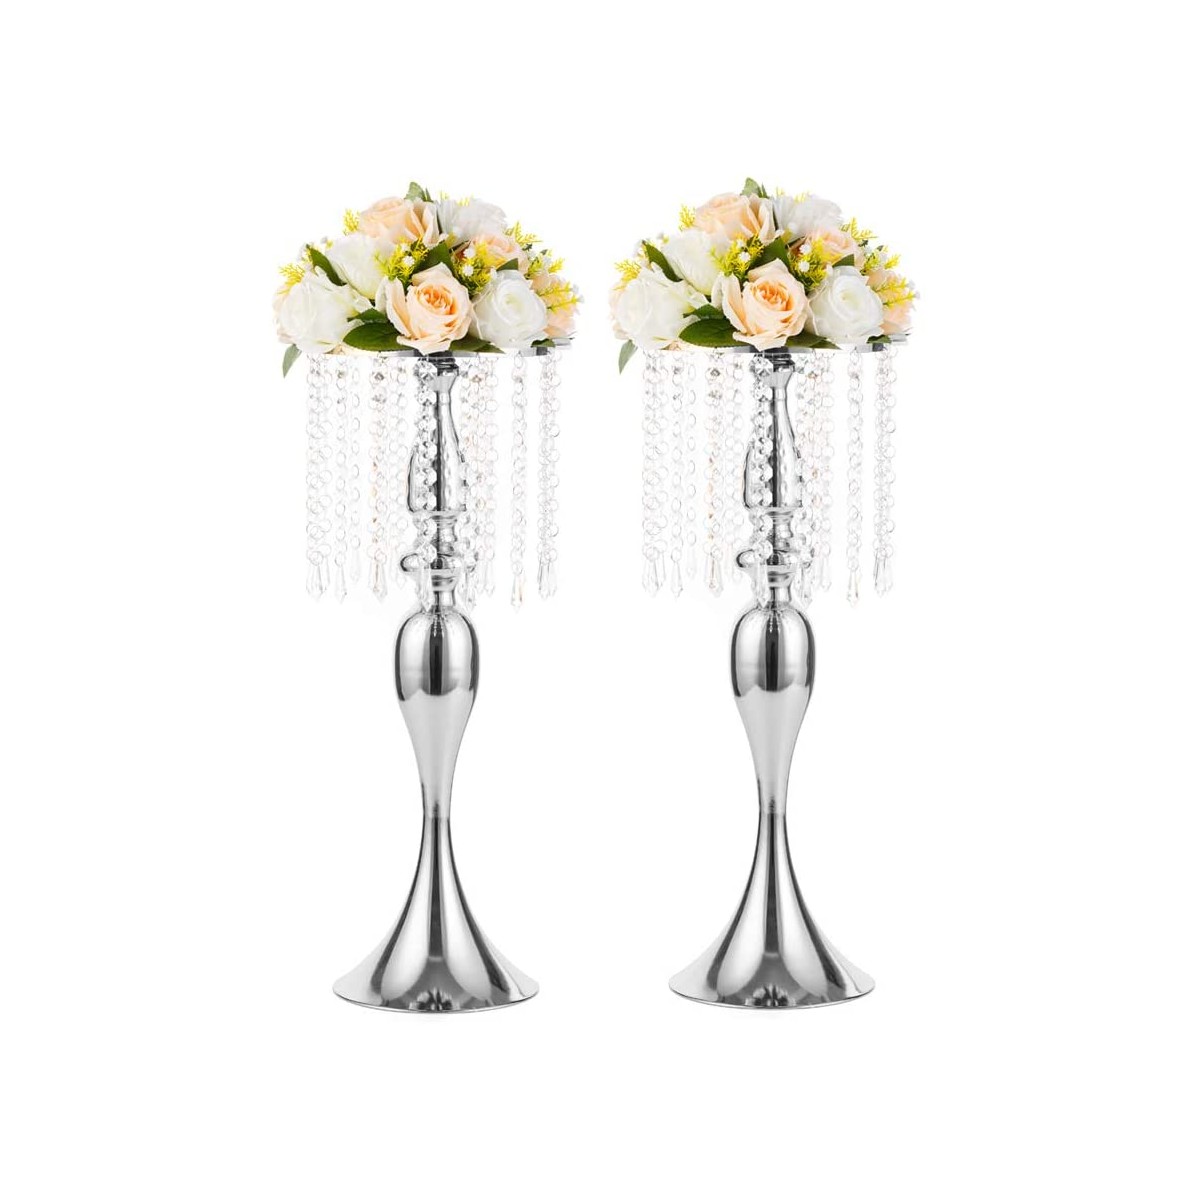 Set da 2 Centrotavola Matrimonio argento, eleganti e raffinati